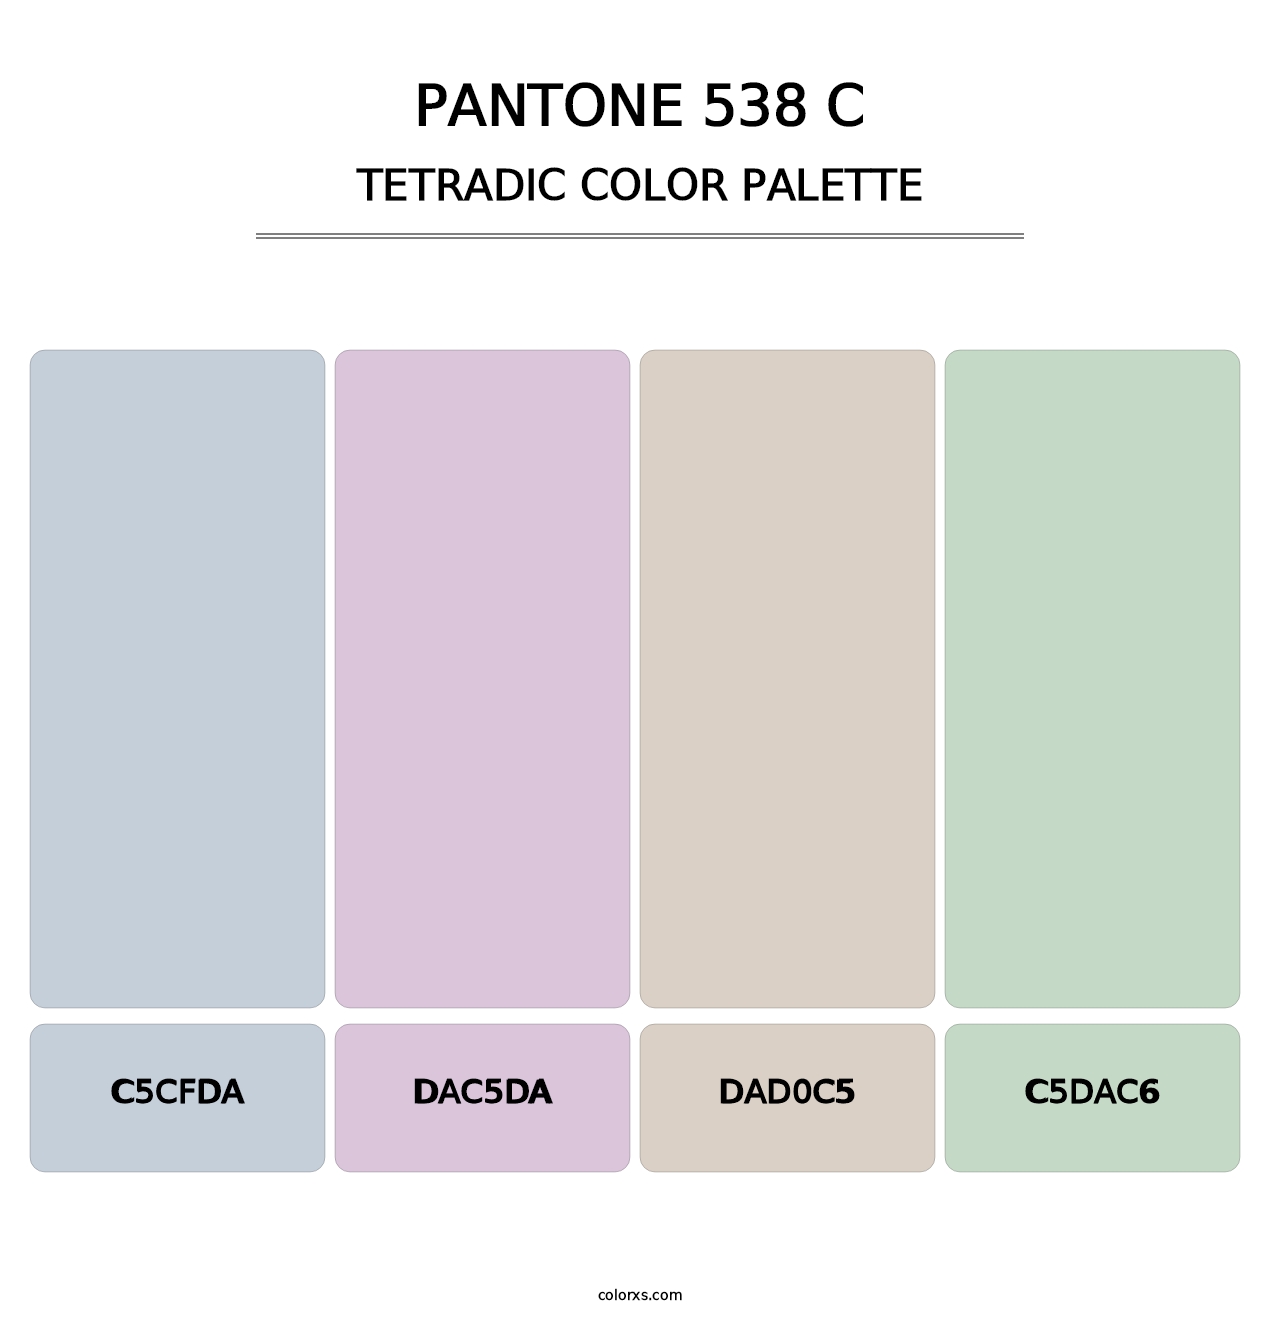 PANTONE 538 C - Tetradic Color Palette